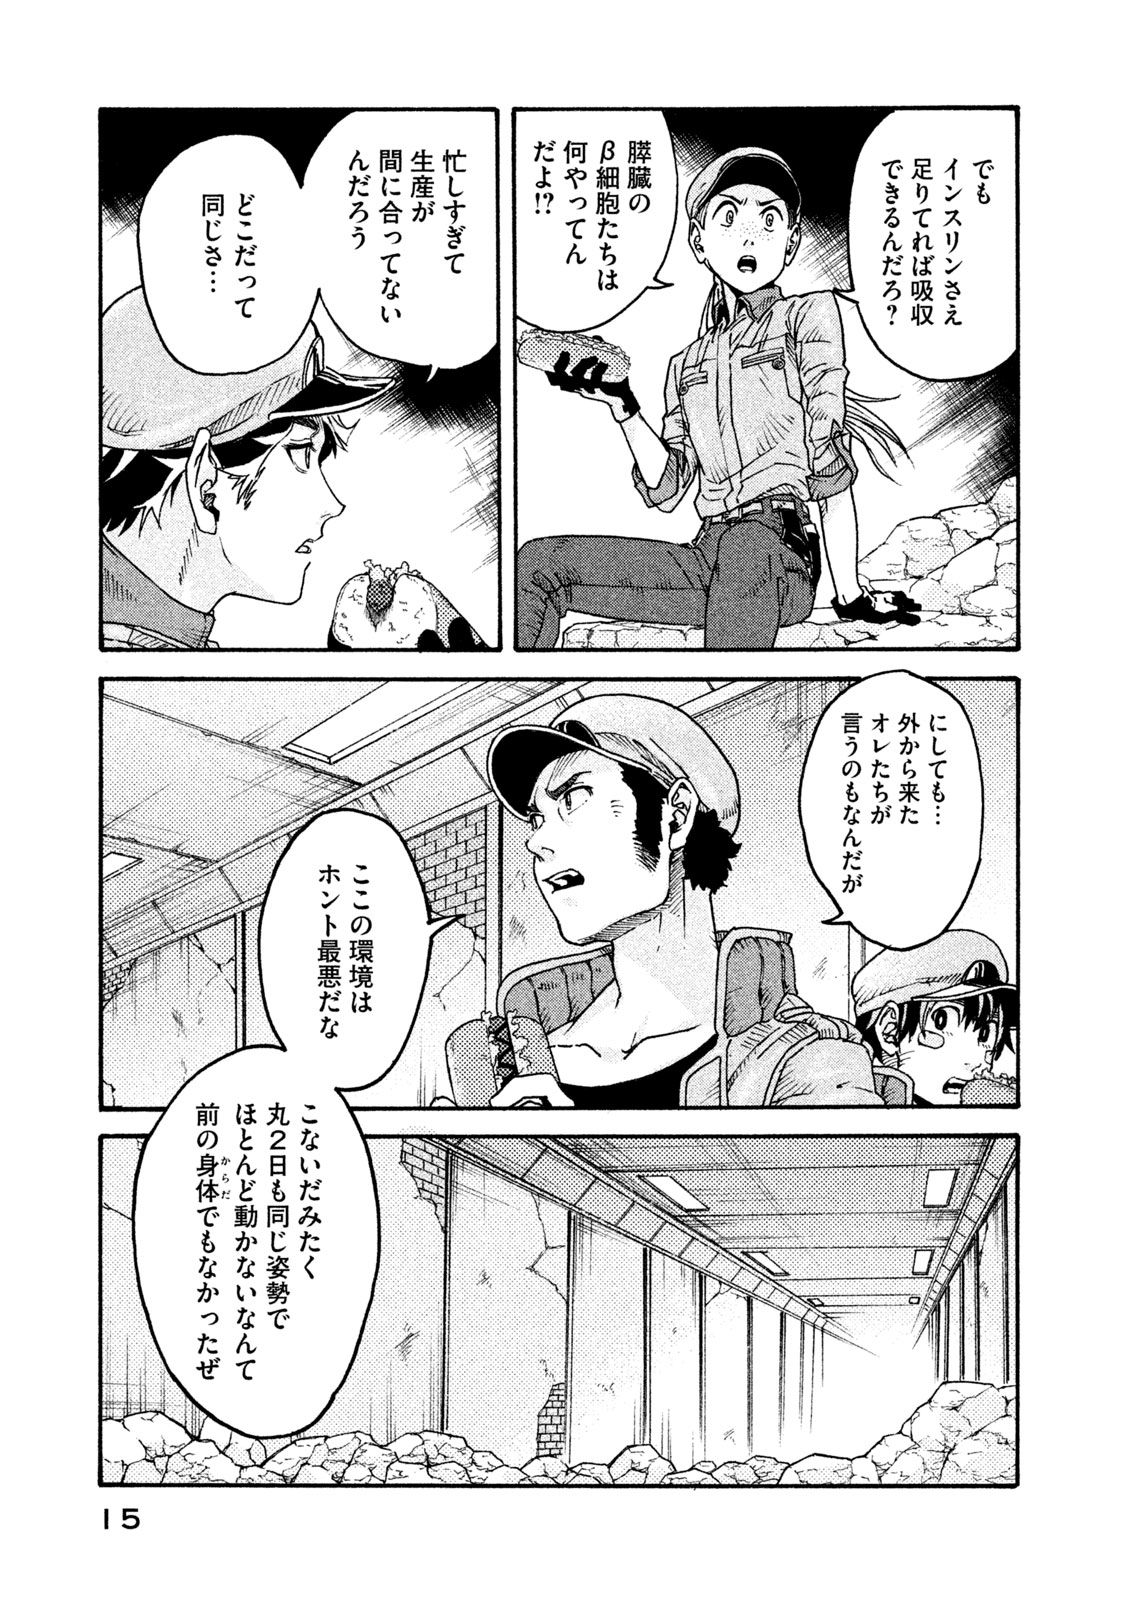 Hataraku Saibou BLACK - Chapter 18 - Page 17